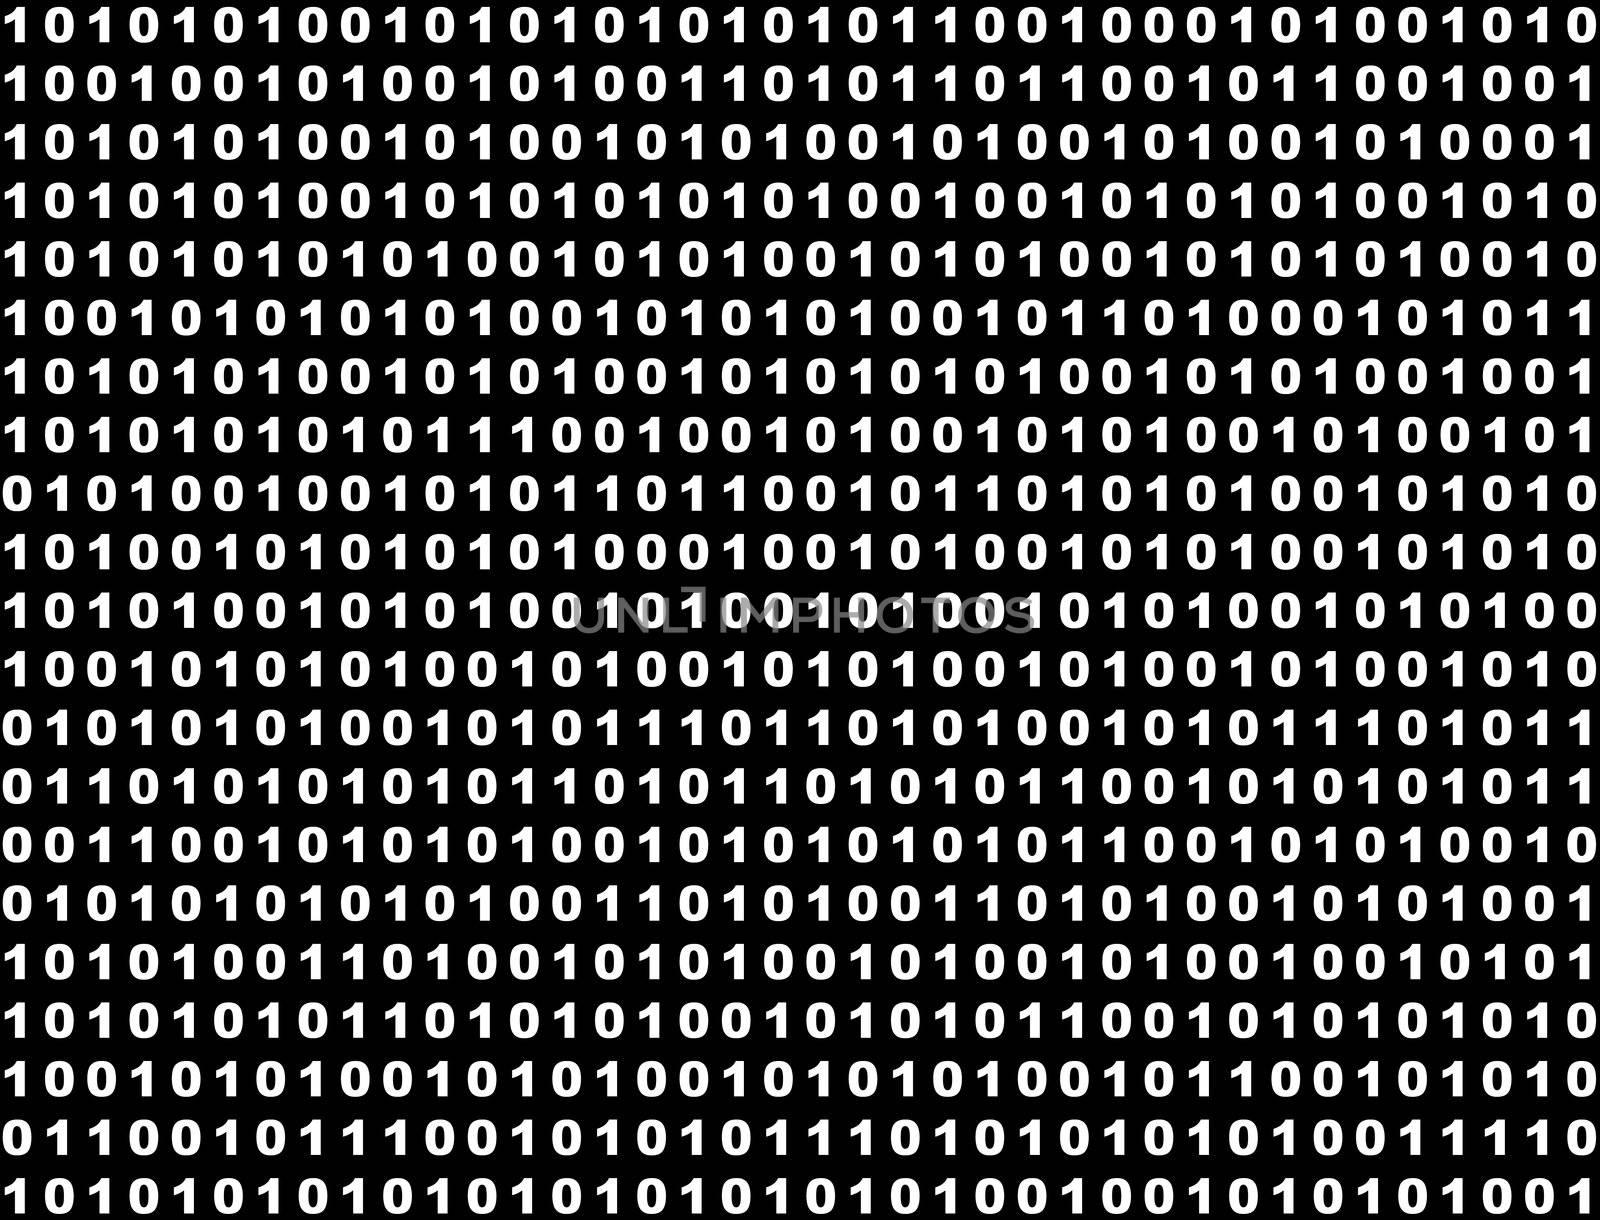 binary code in black and white